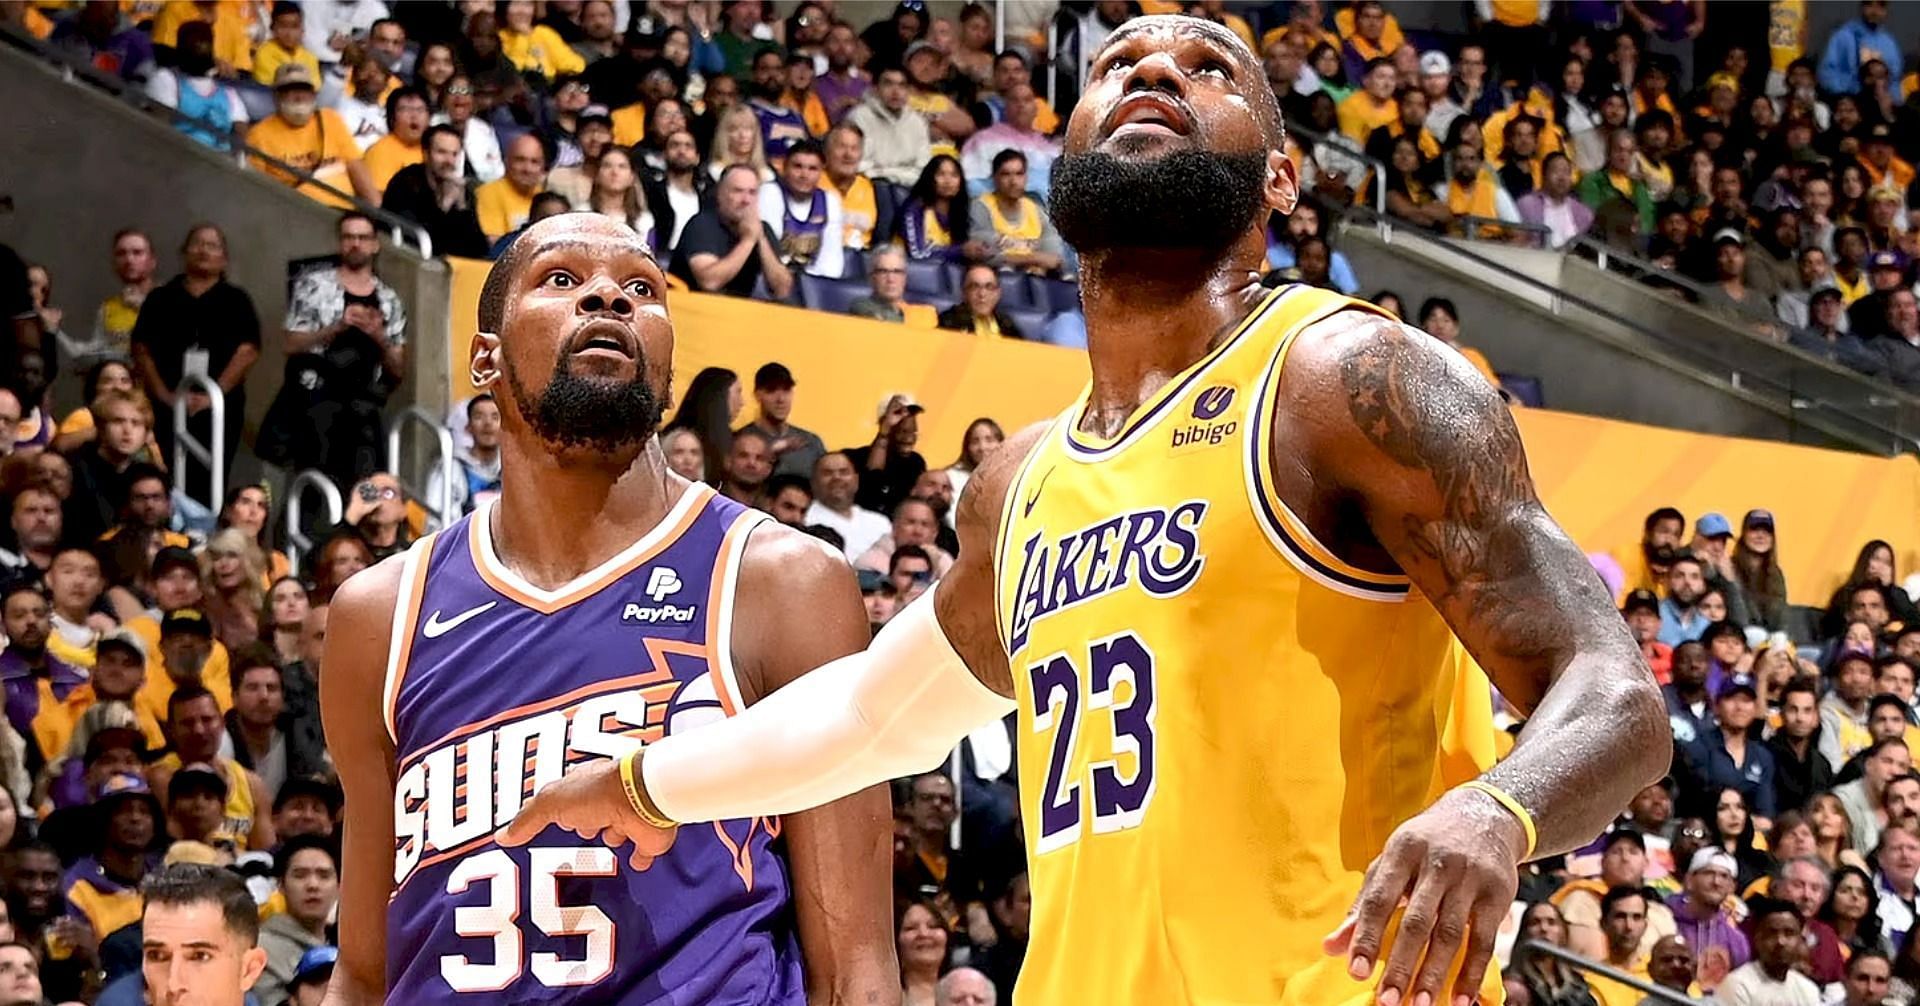 NBA superstar forwards Kevin Durant and LeBron James